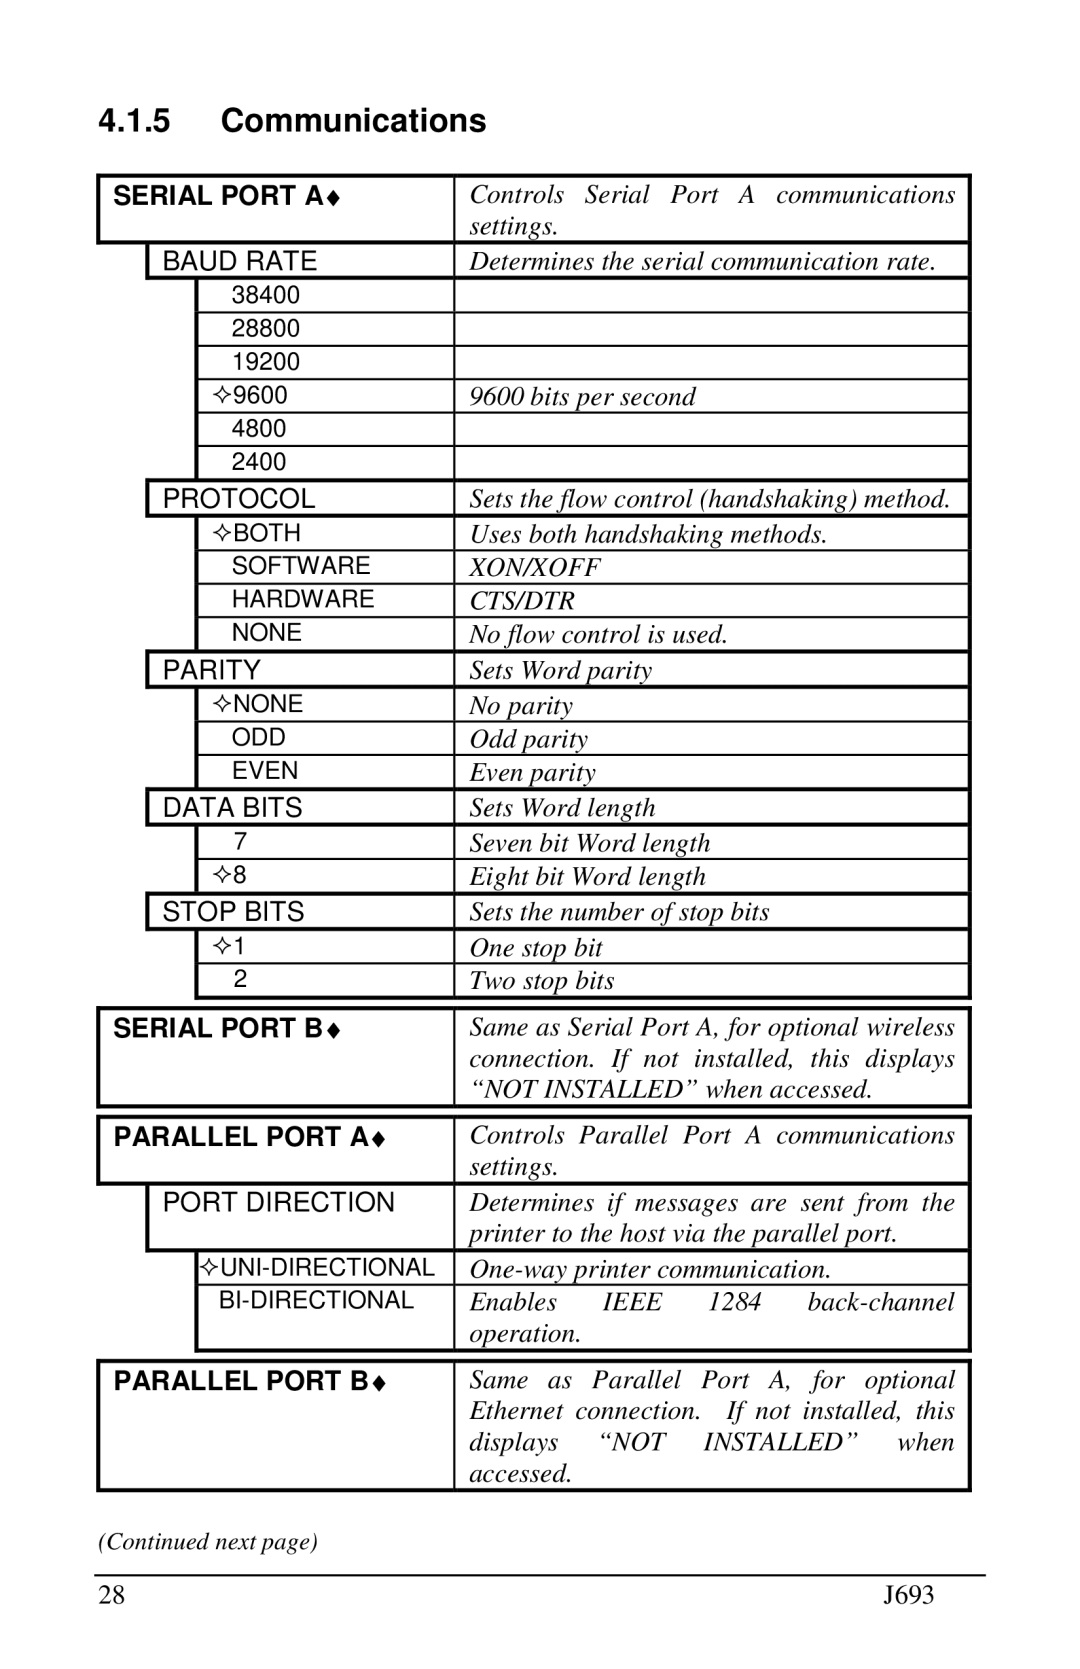 Pitney Bowes J693 manual Communications 